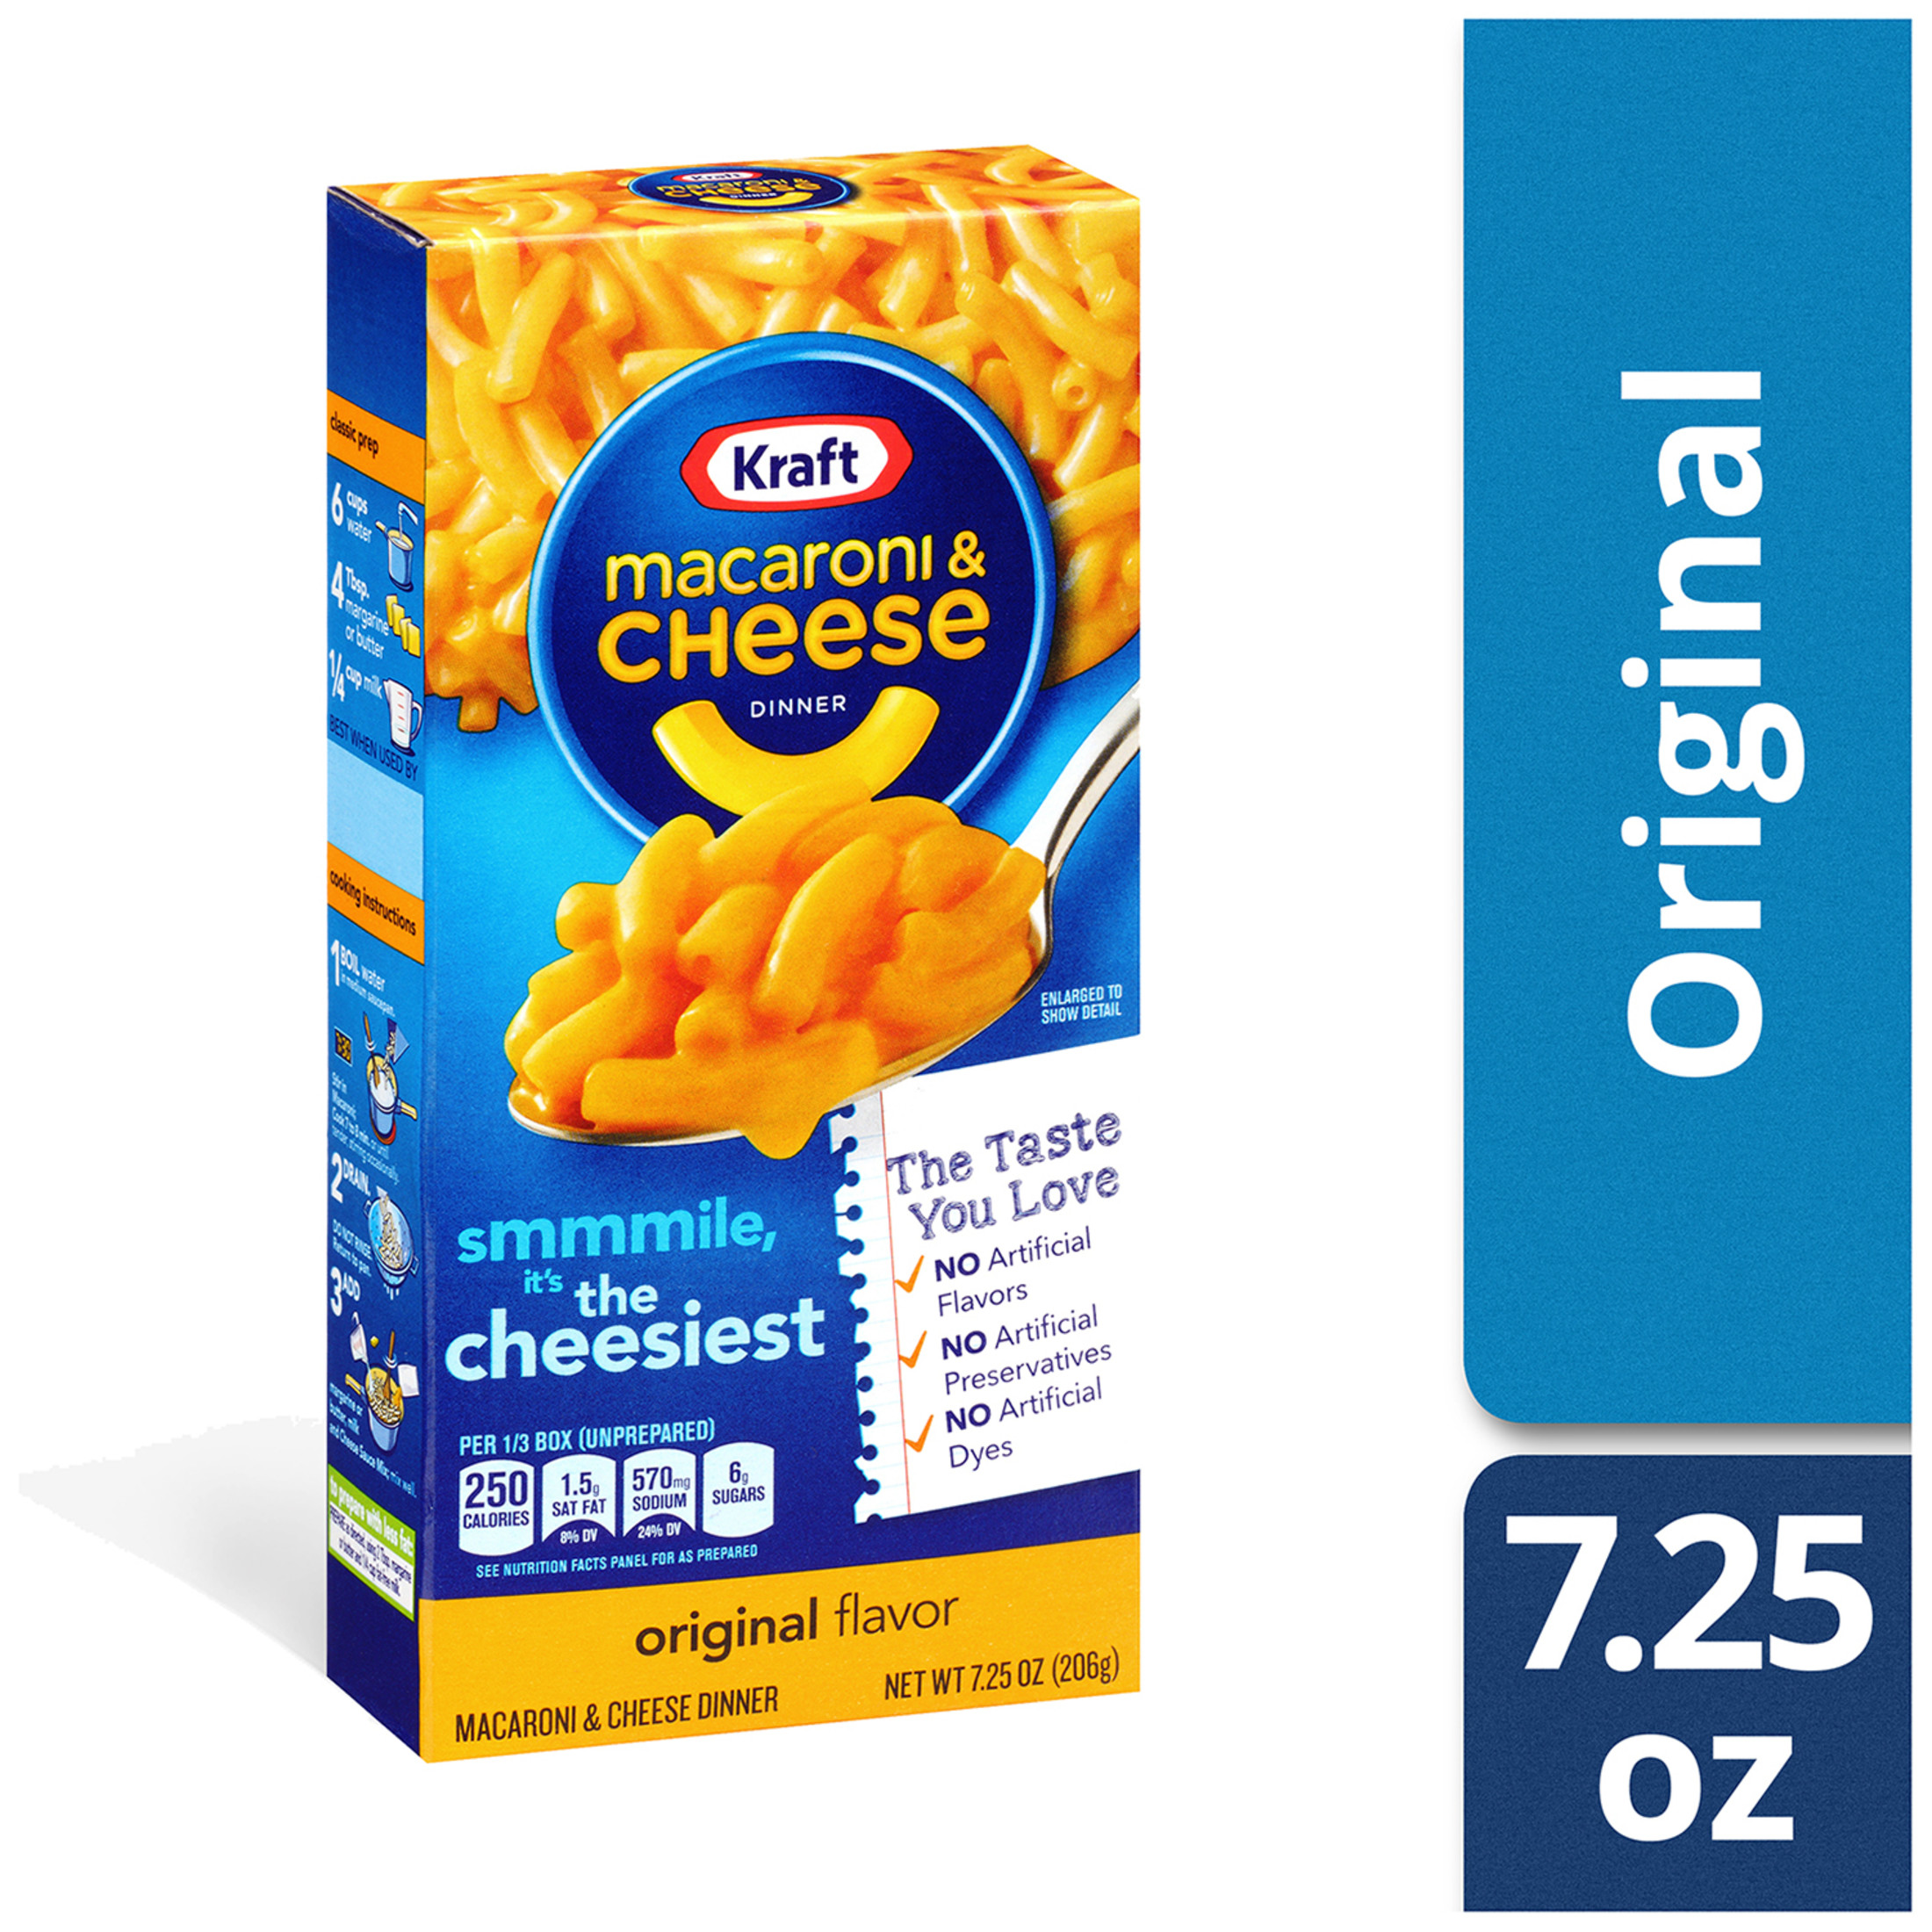 Kraft Original Mac N Cheese Macaroni and Cheese Dinner, 7.25 oz Box - image 14 of 19